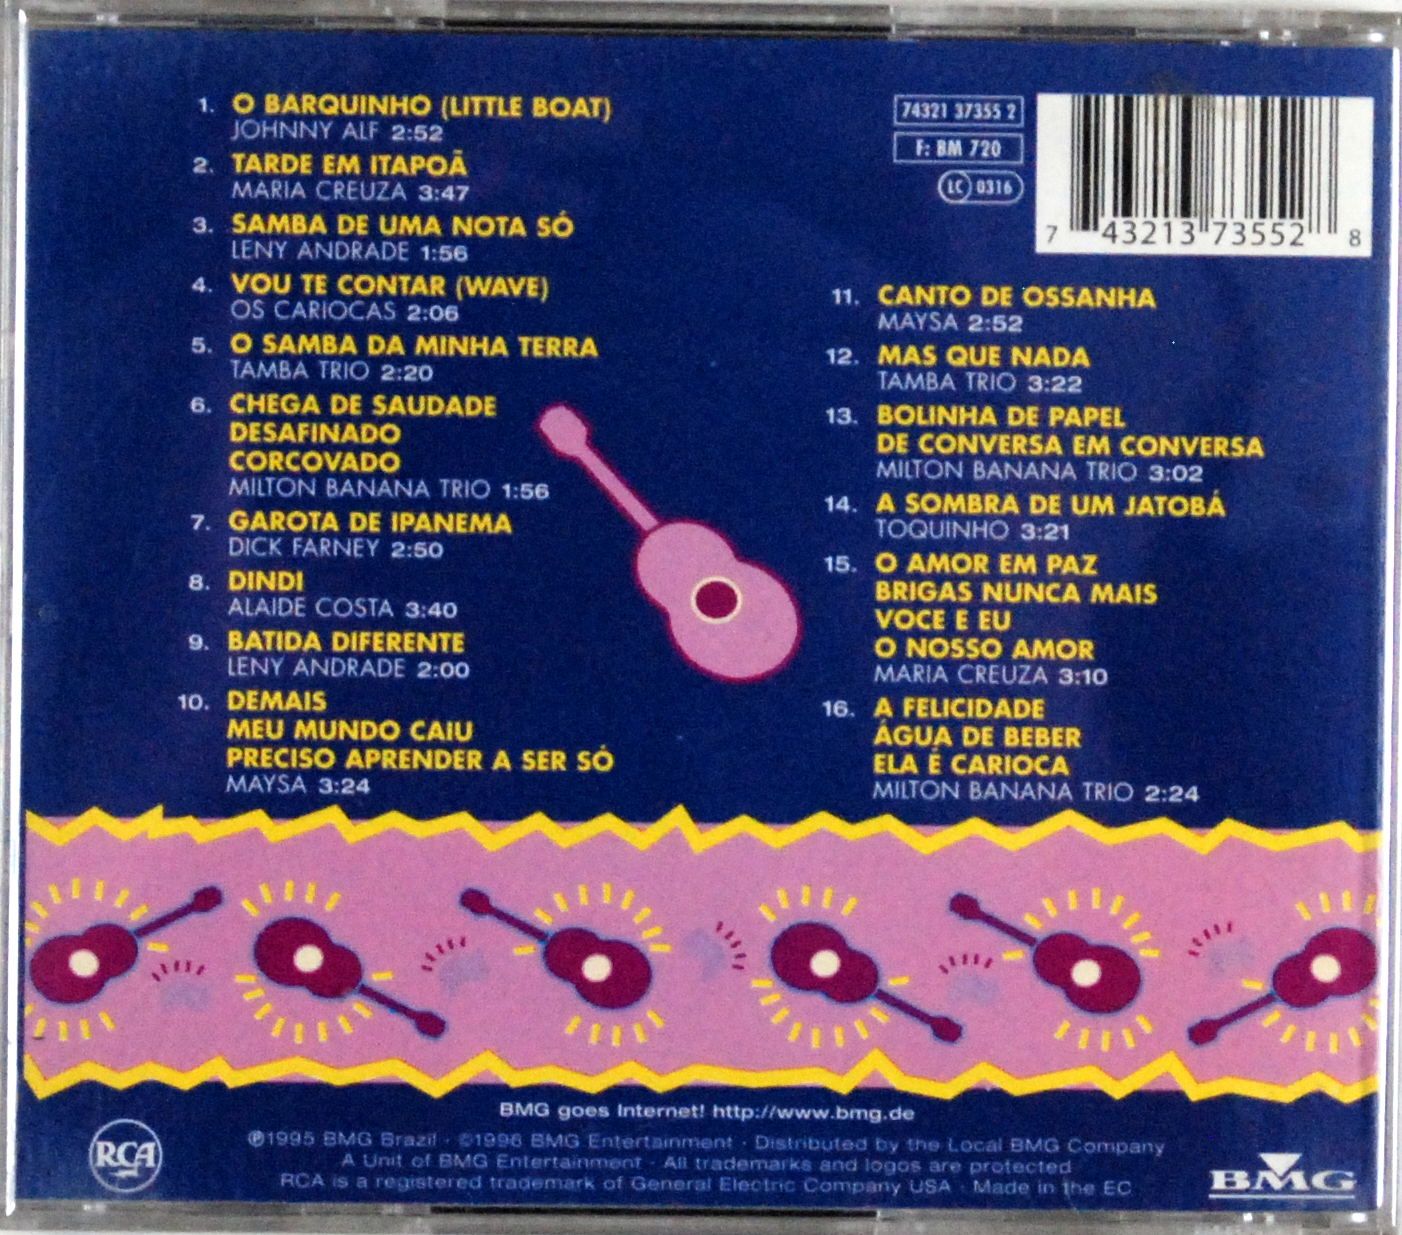 (CD) VA - Bossa Nova The Greatest Hits s.BDB